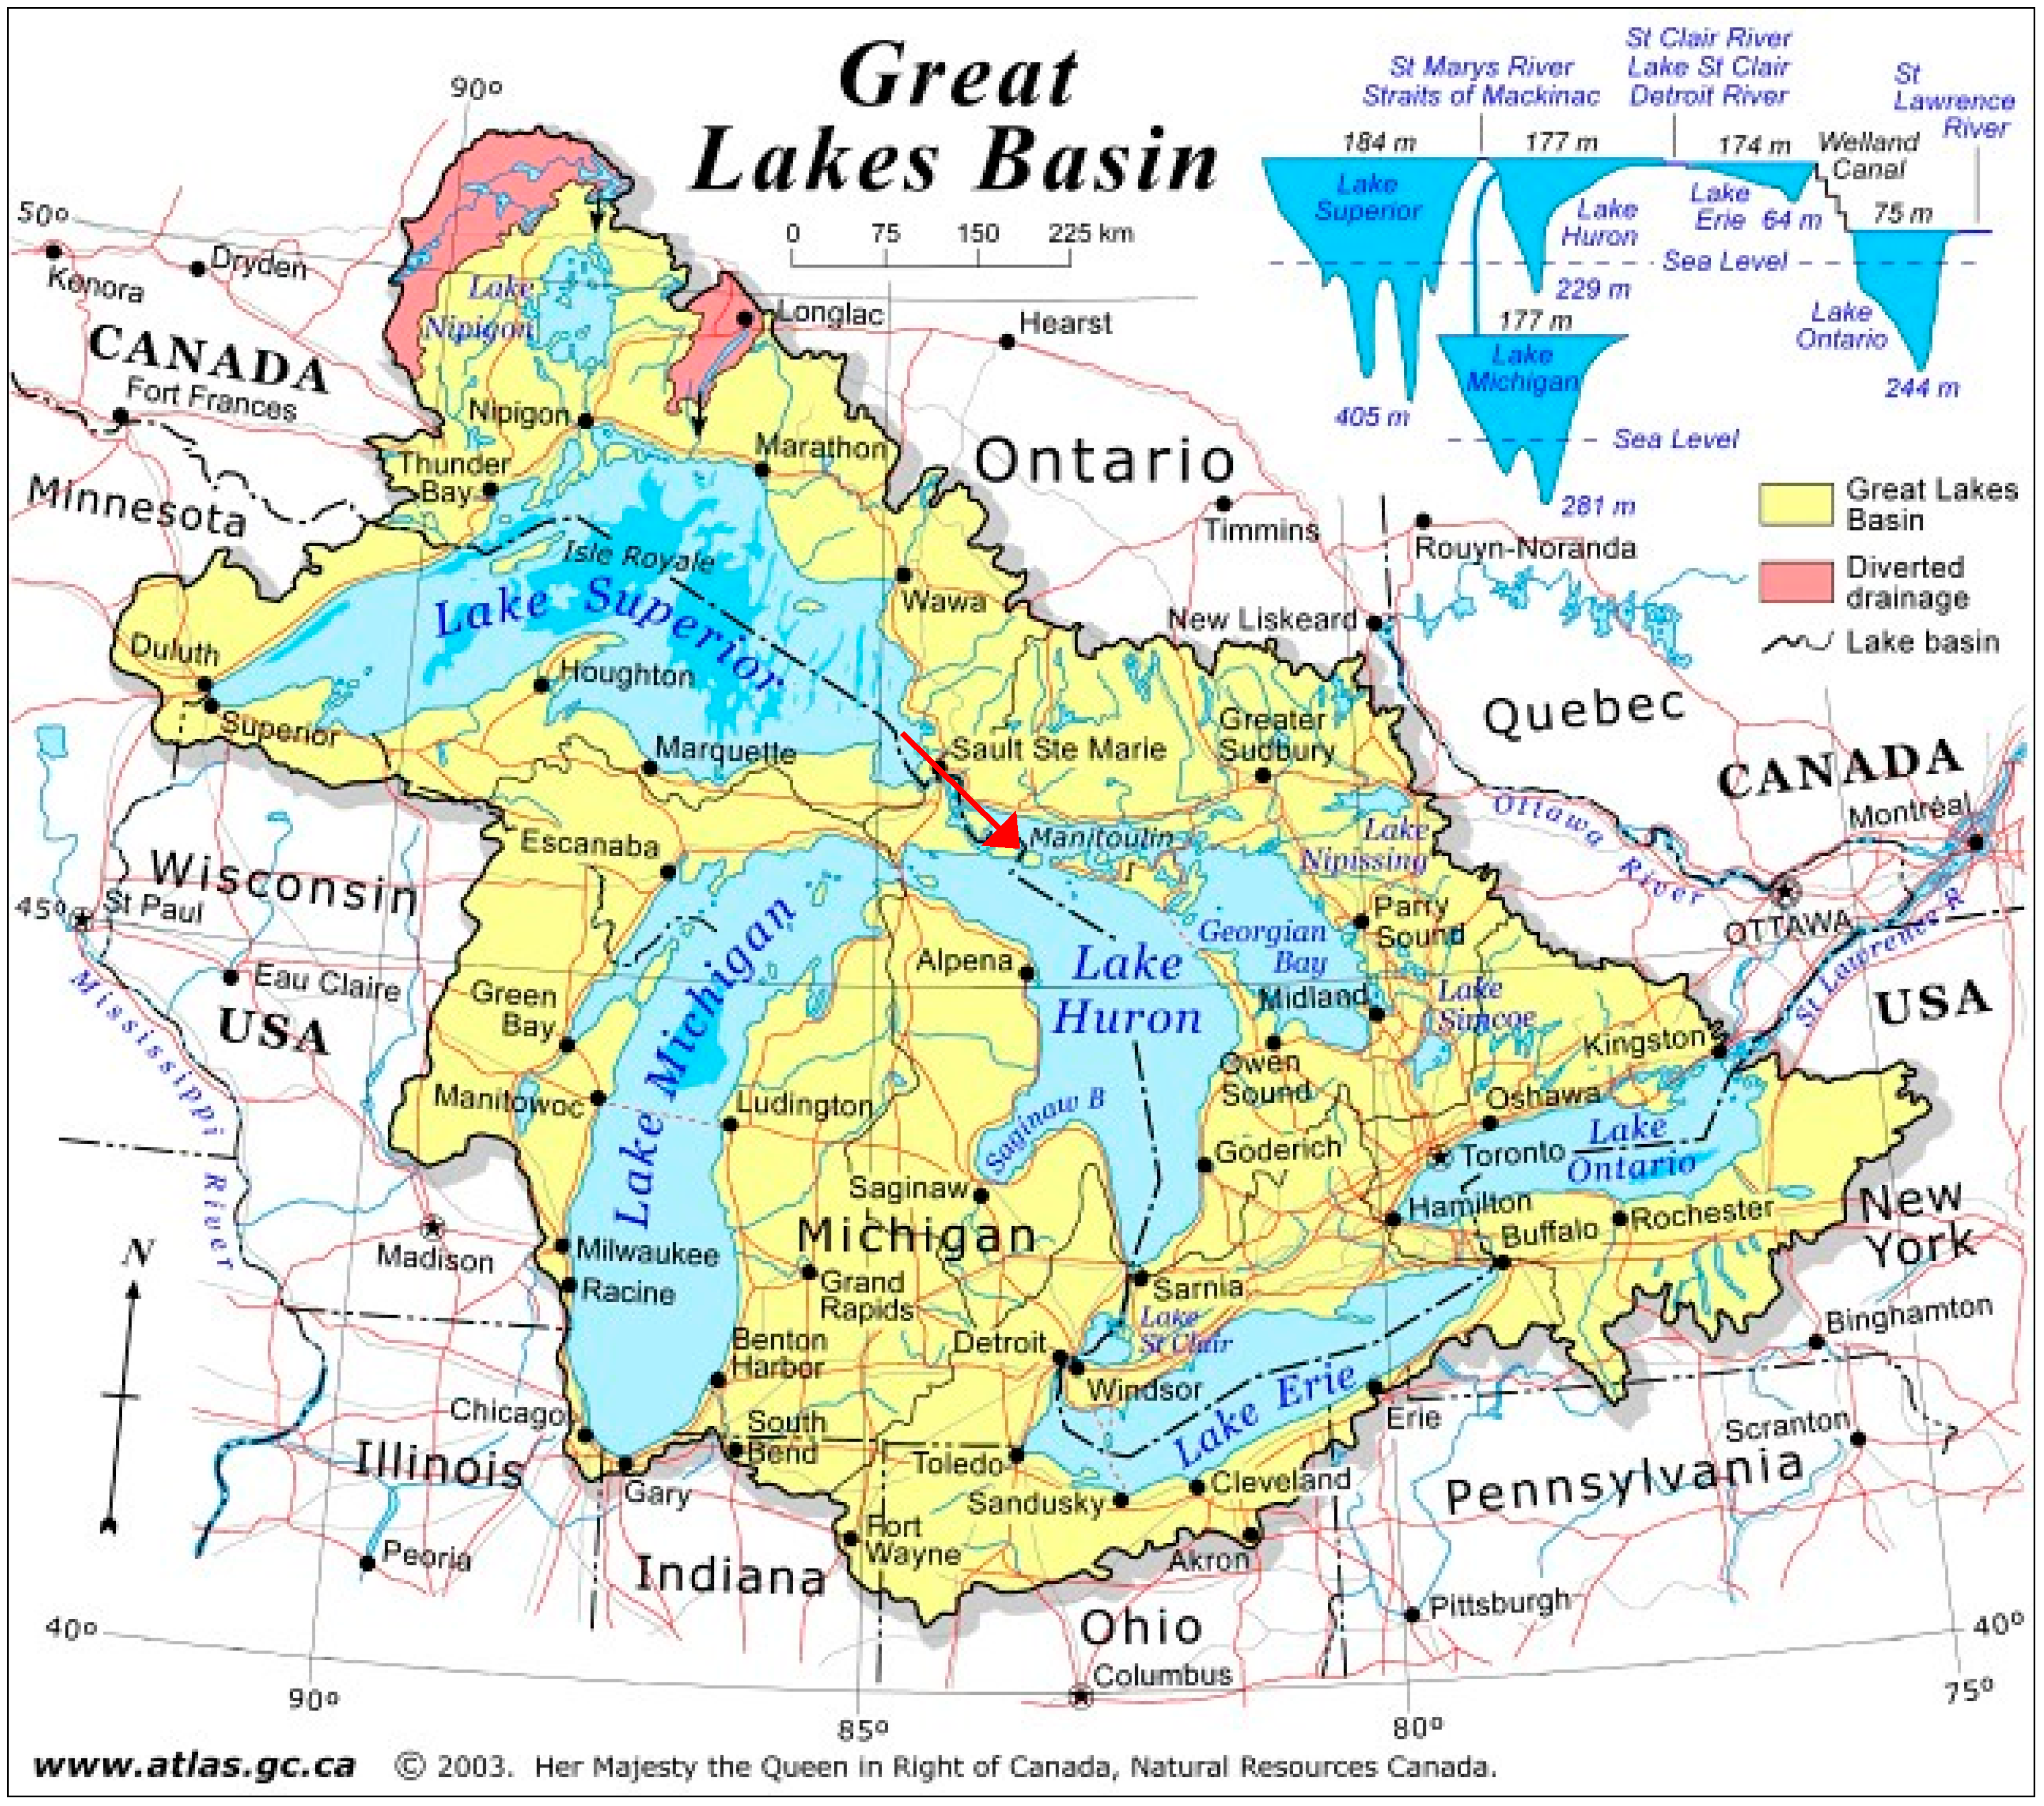 Реки озера на английском. Великие озера Канады на карте. Озеро Онтарио Канада на карте Северной Америки. Канадские озера на карте. Озеро Онтарио на карте.